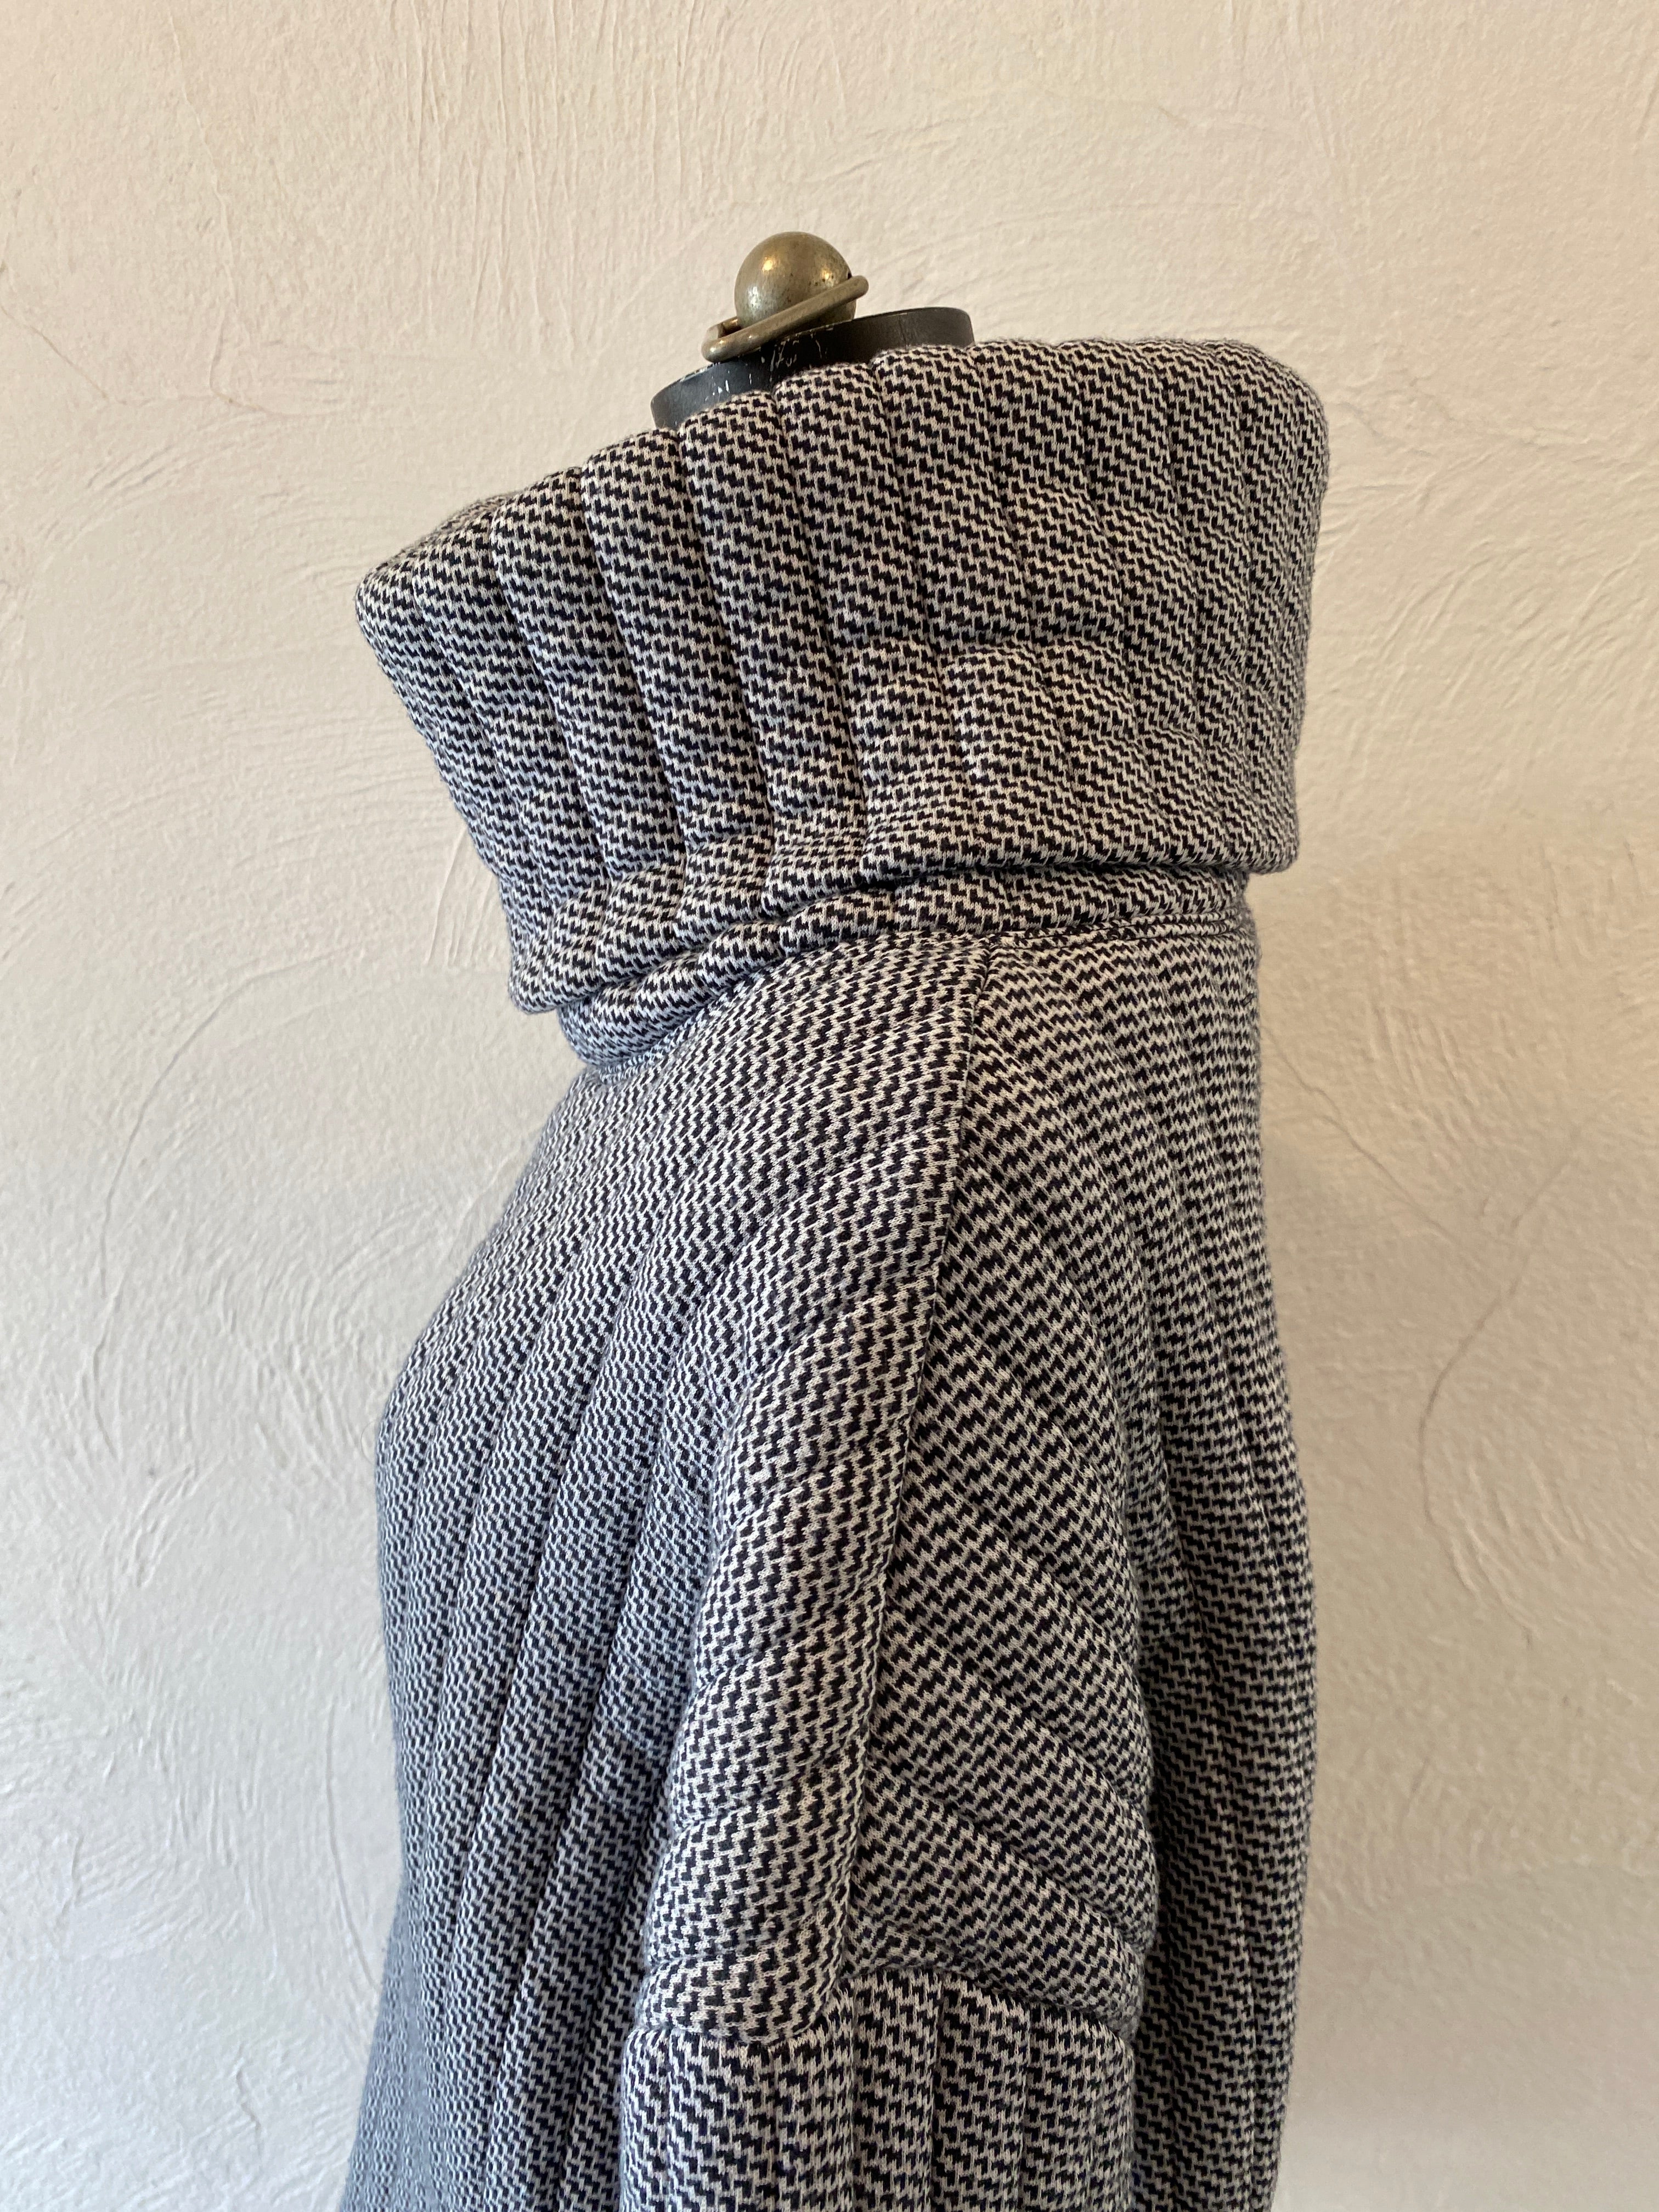 padding quilt pullover